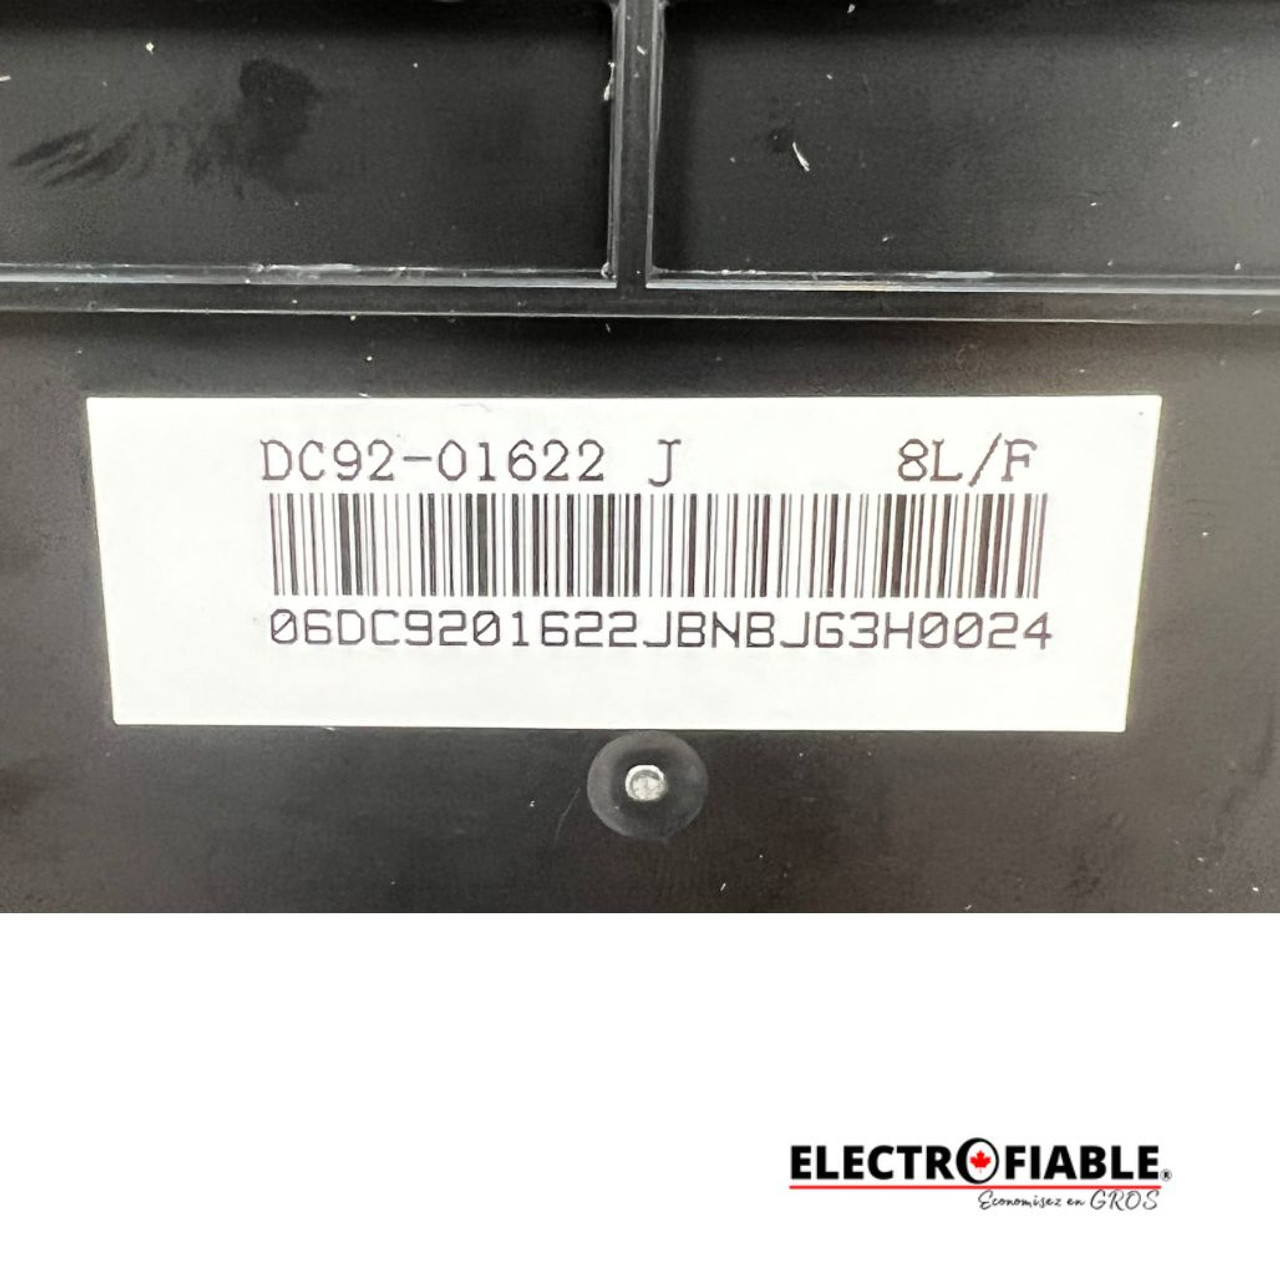 DC92-01622J Washer PCB display WF42H5000AW/A2-00